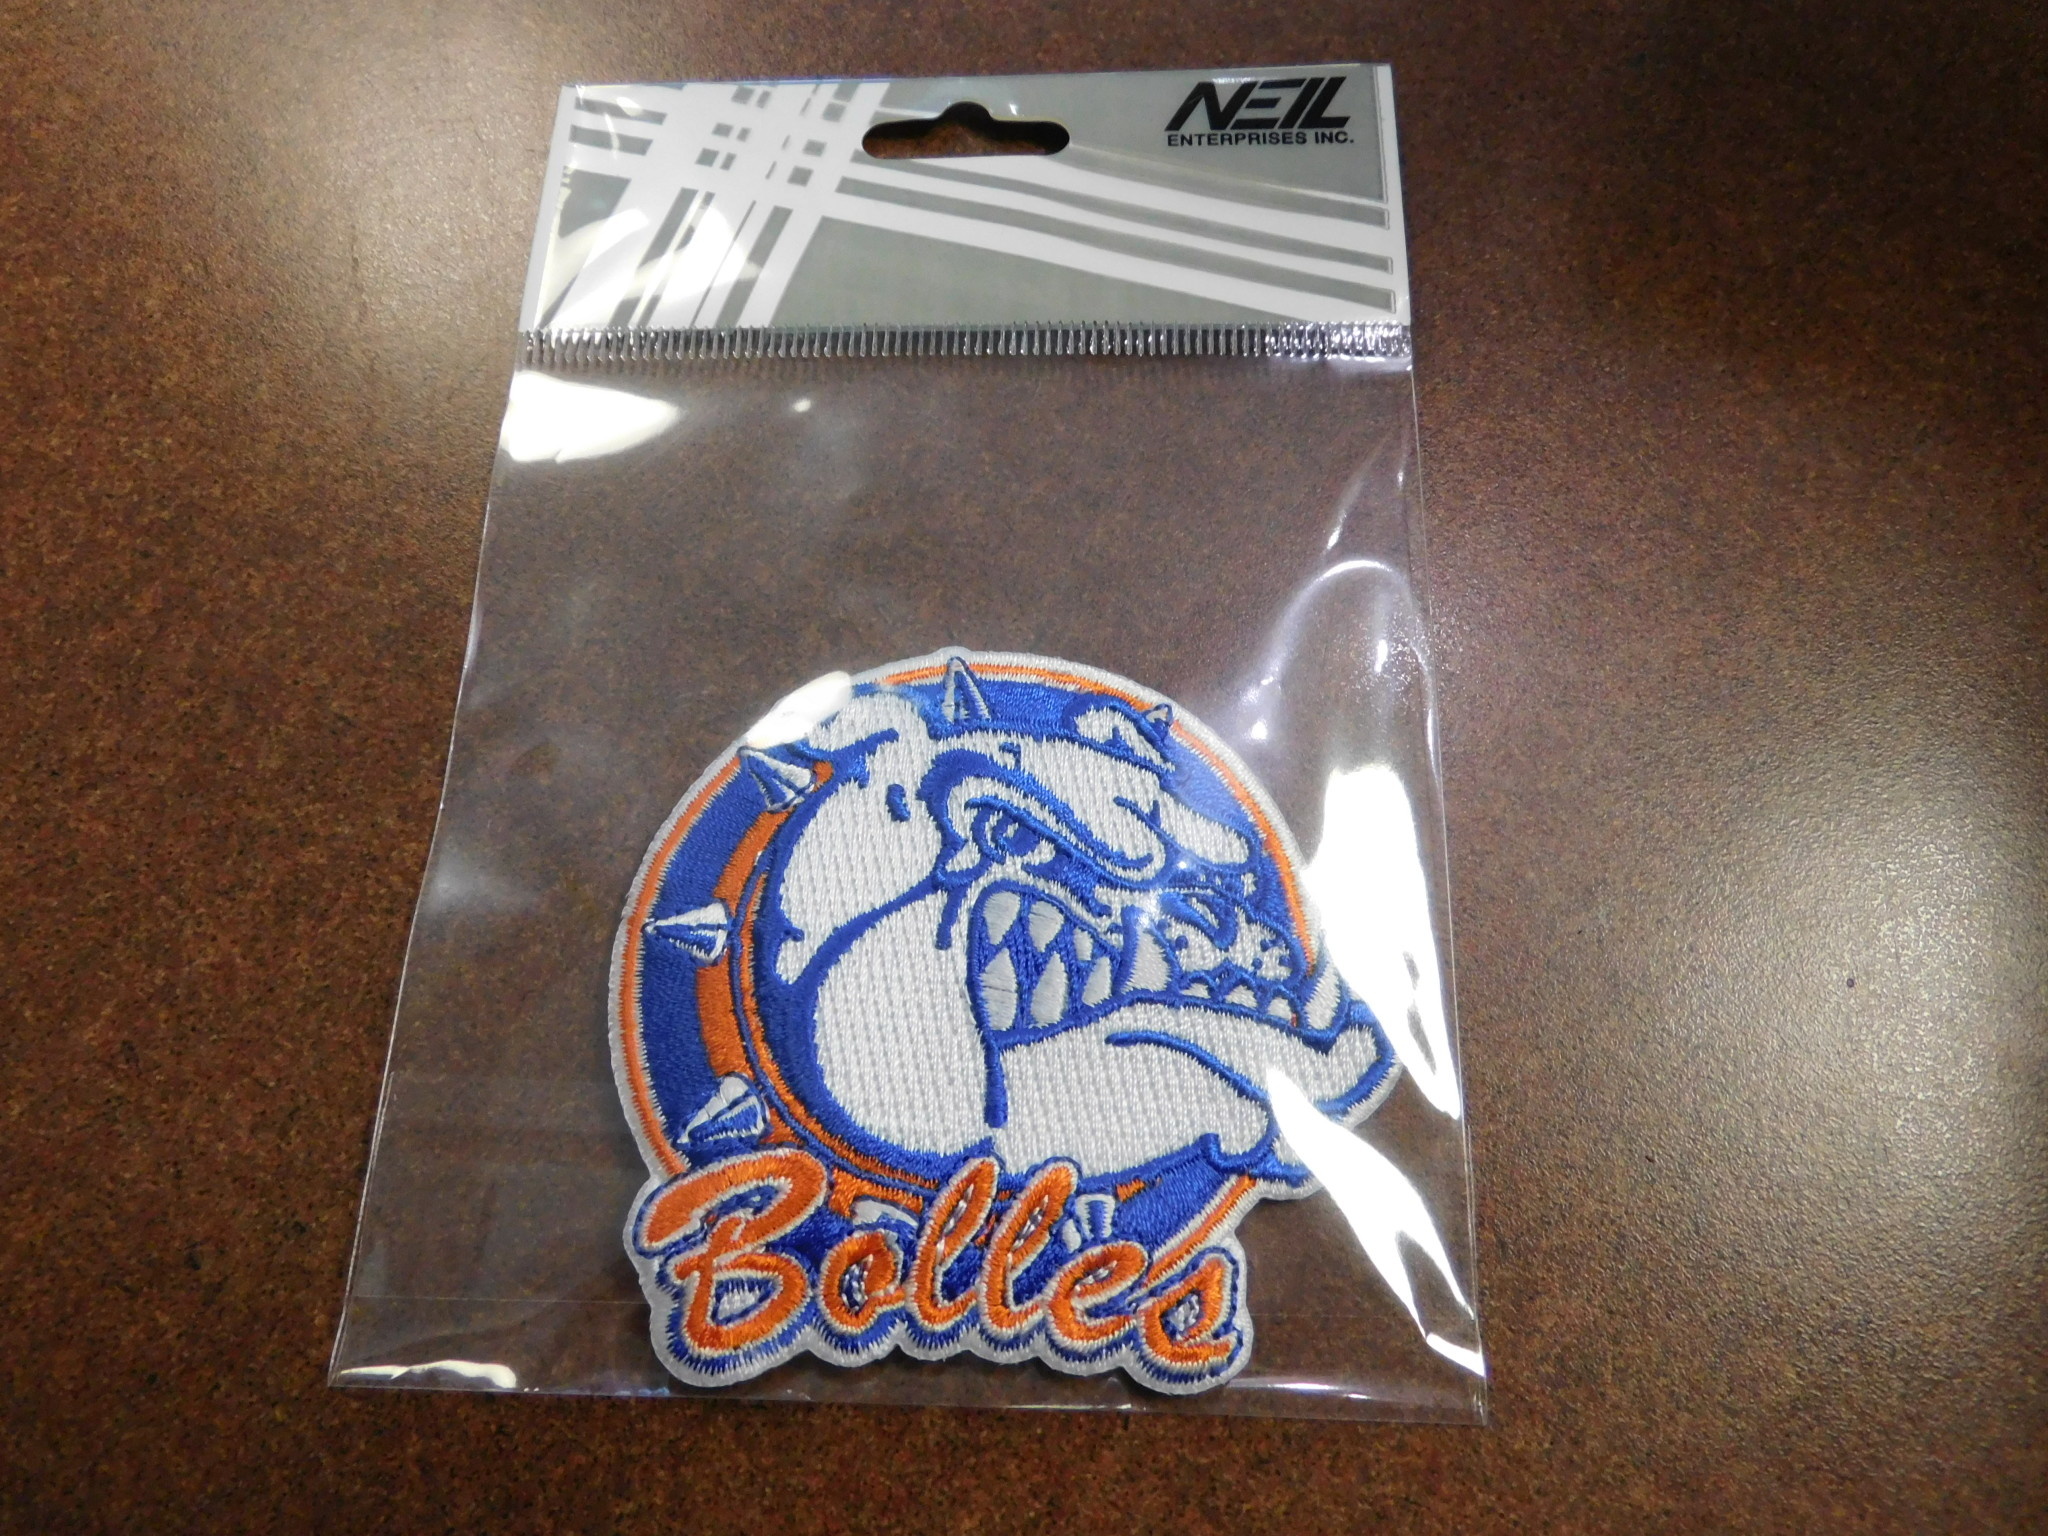 Neil Patch Emblem Embroidered Bulldog 3",",",02 Gift Merchandise"